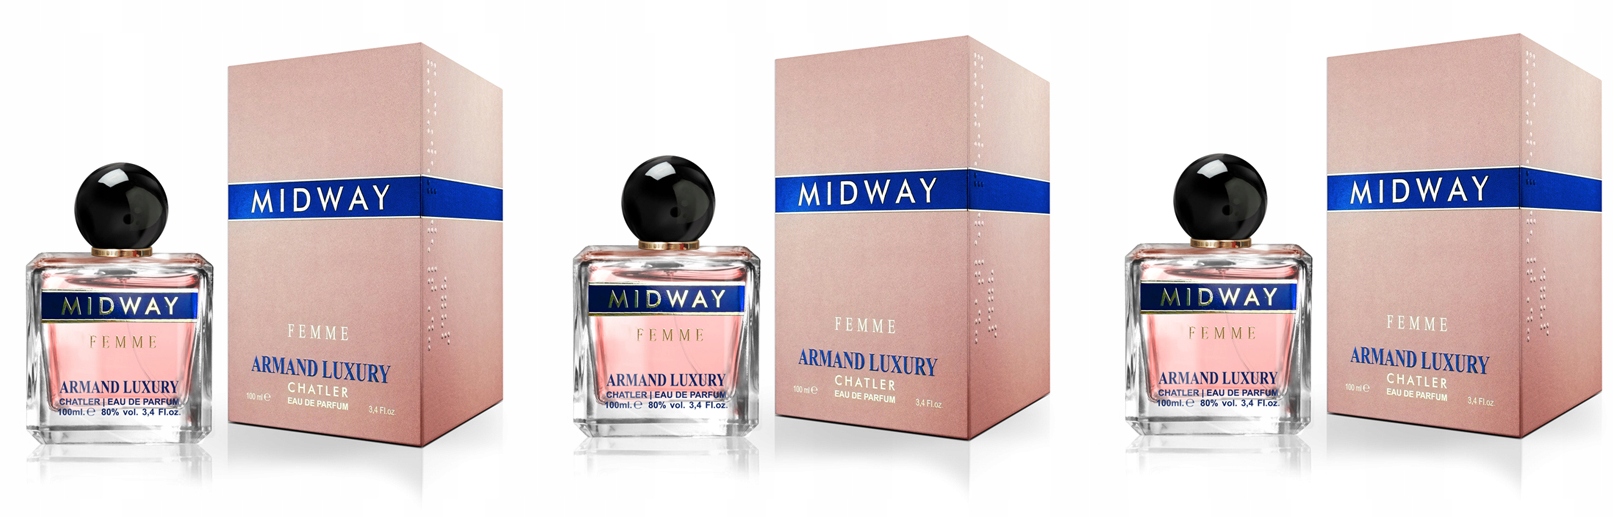 Chatler Armand Luxury Midway 3x100ml parfumovaná voda